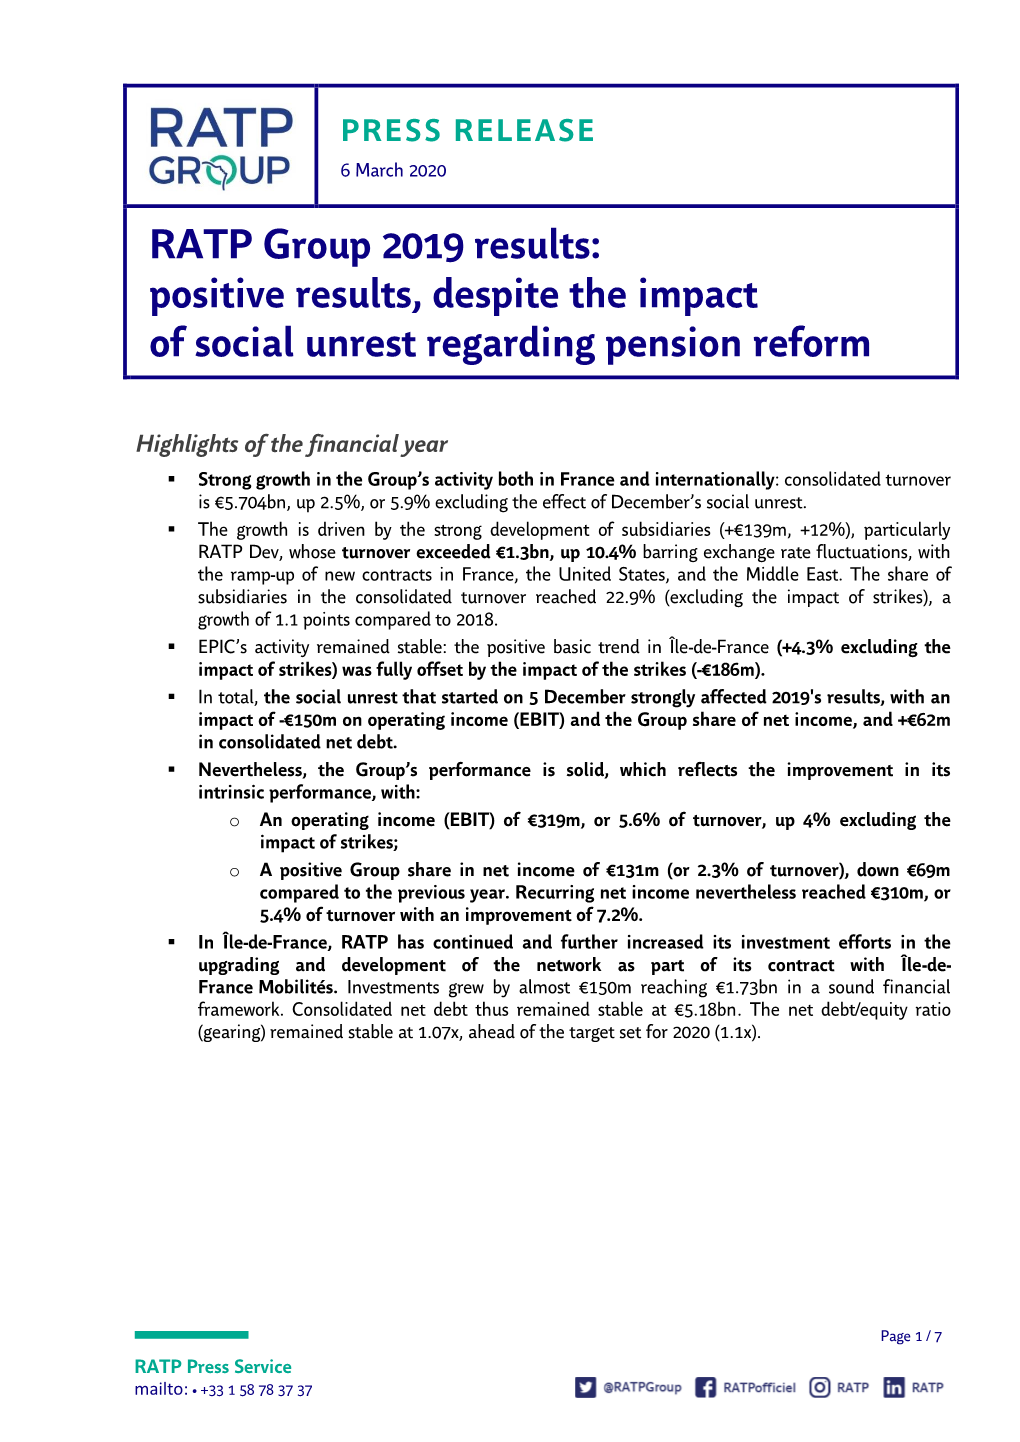 RATP Group 2019 Results: Positive Results, Despite the Impact of Social Unrest Regarding Pension Reform